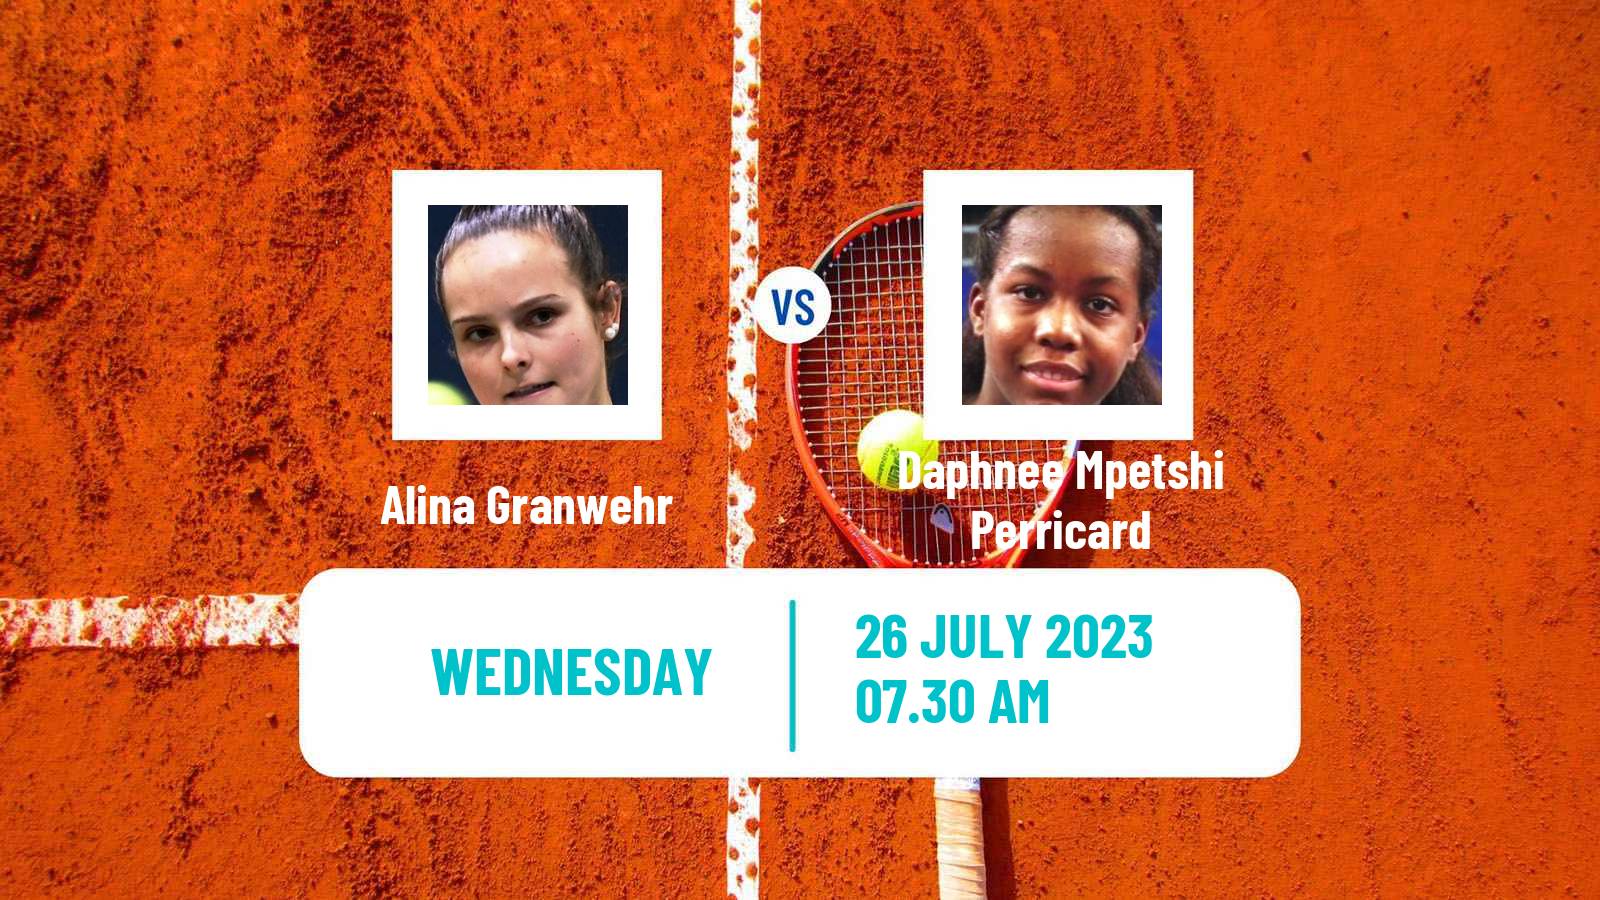 Tennis ITF W15 Casablanca 2 Women Alina Granwehr - Daphnee Mpetshi Perricard